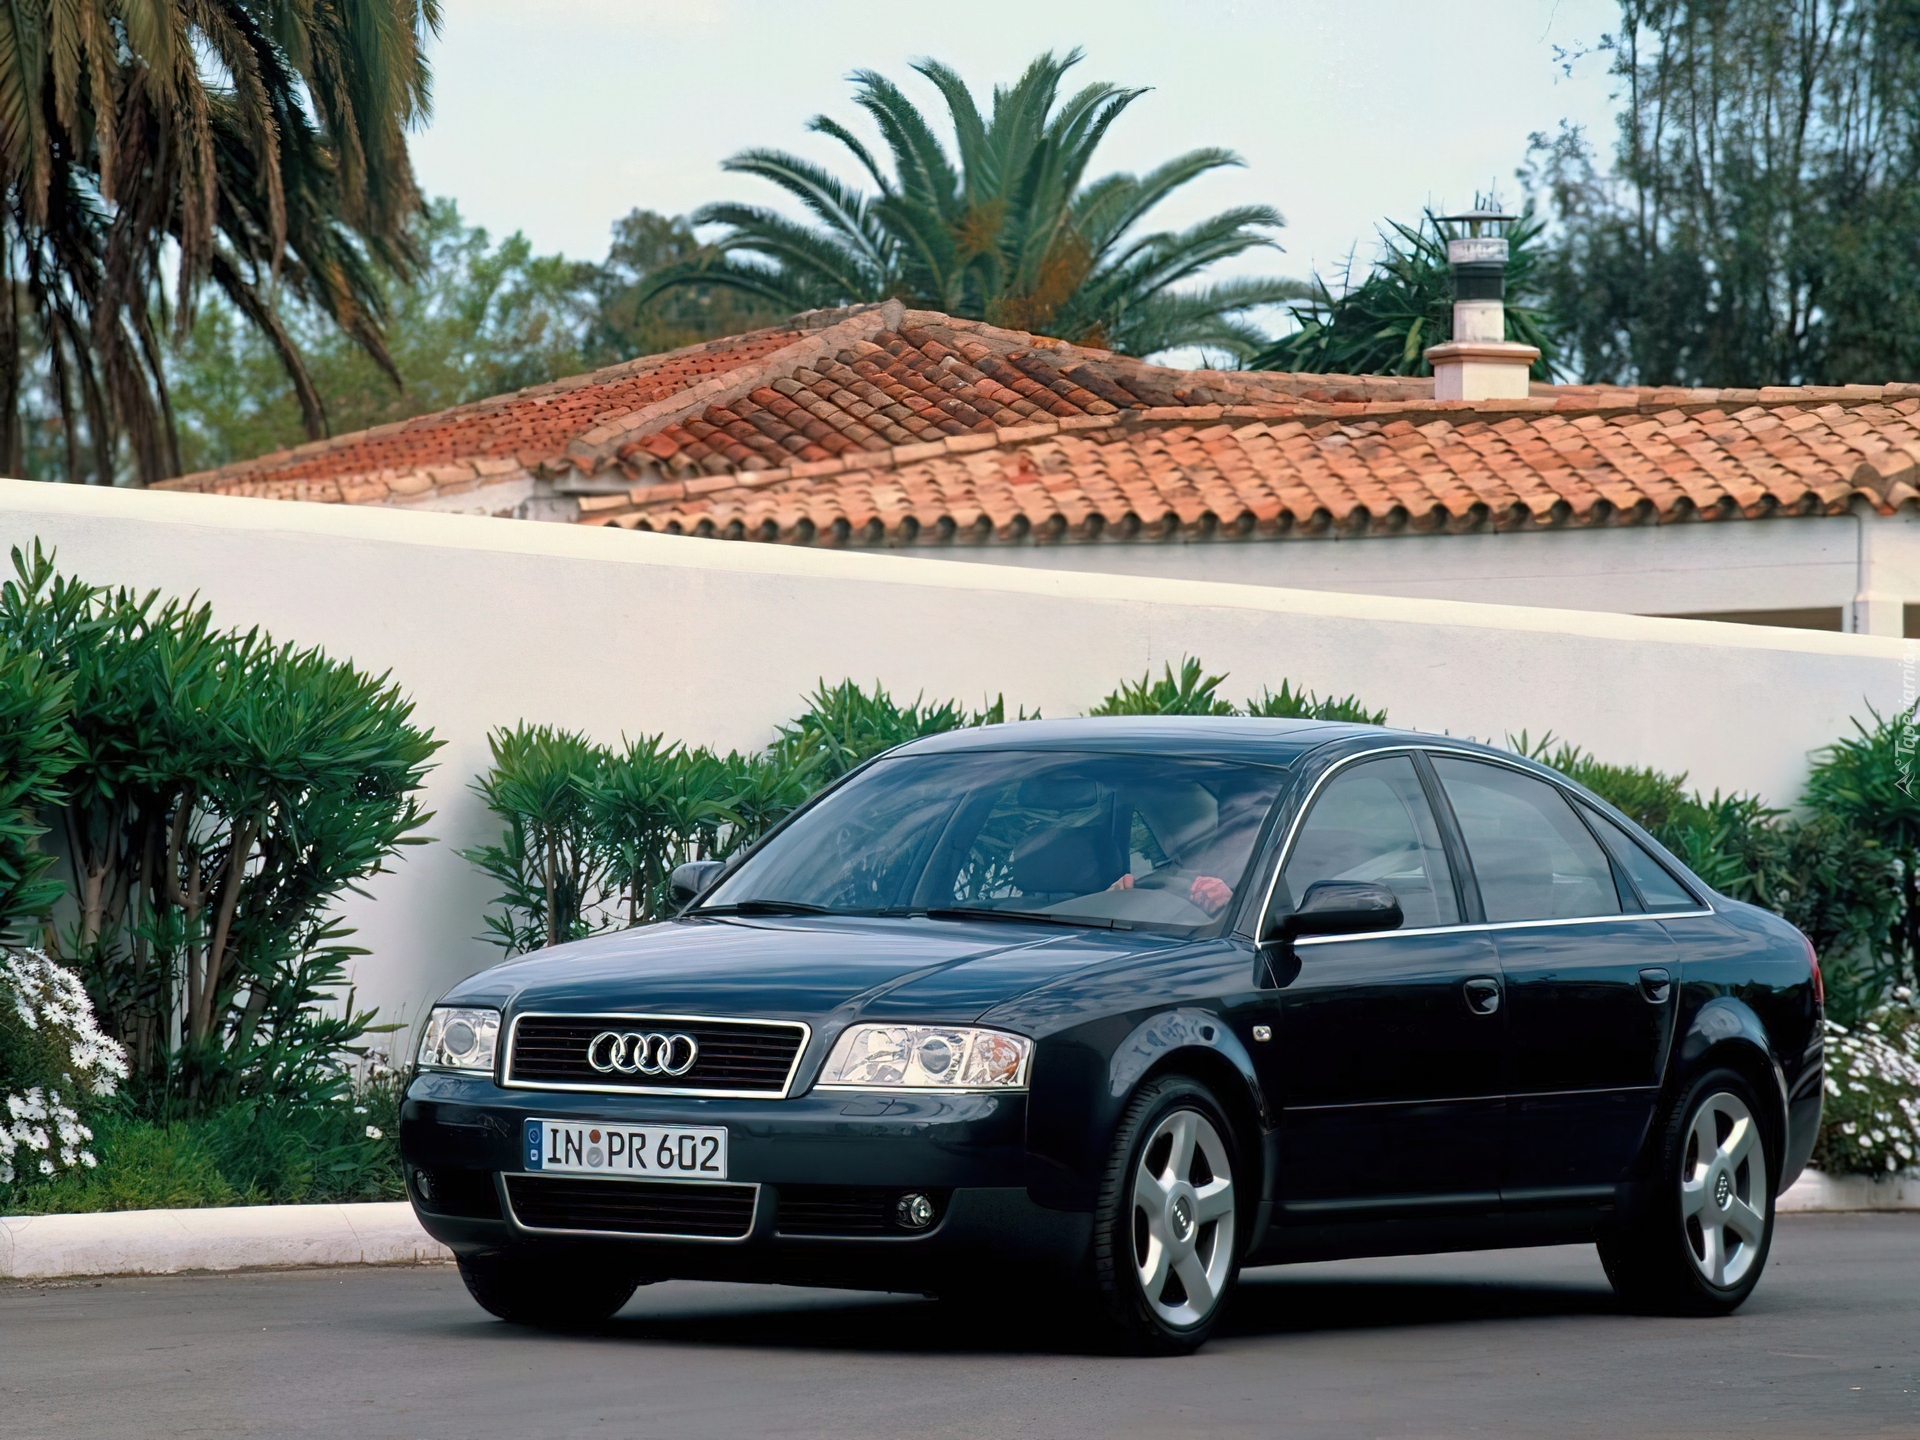 Ауди а6 с5 2001 год. Audi a6 c5 2002. Audi a6 c5 97. Audi a6 c5 седан. Audi a6 2001.